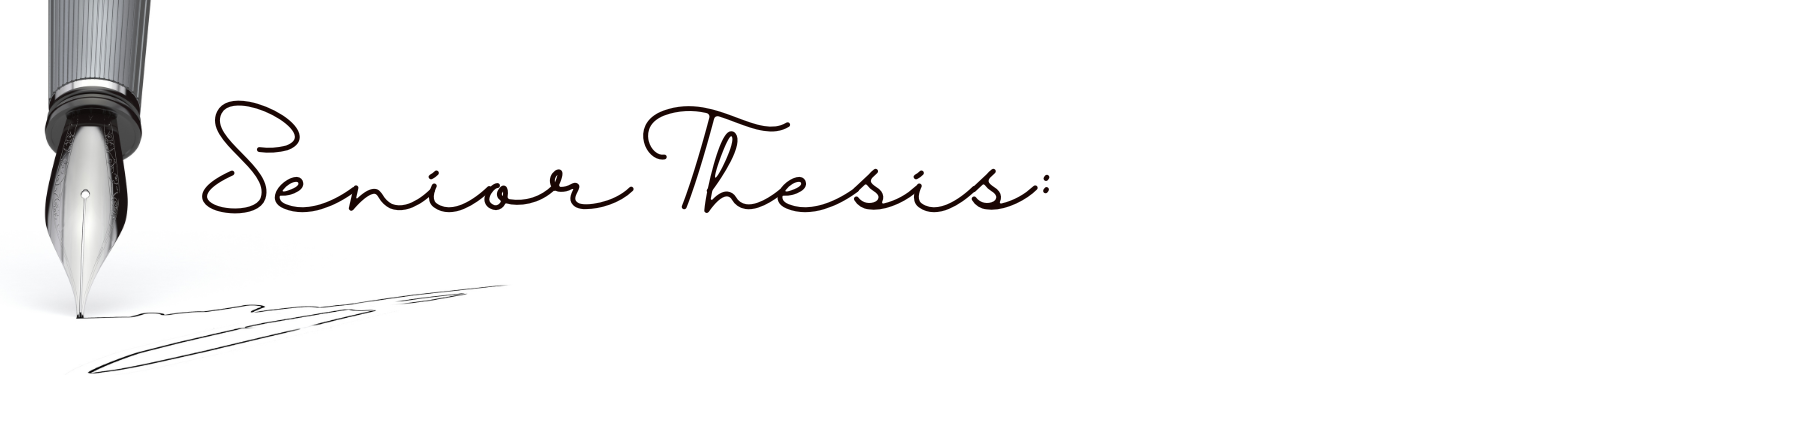 Senior Thesis Blog Header